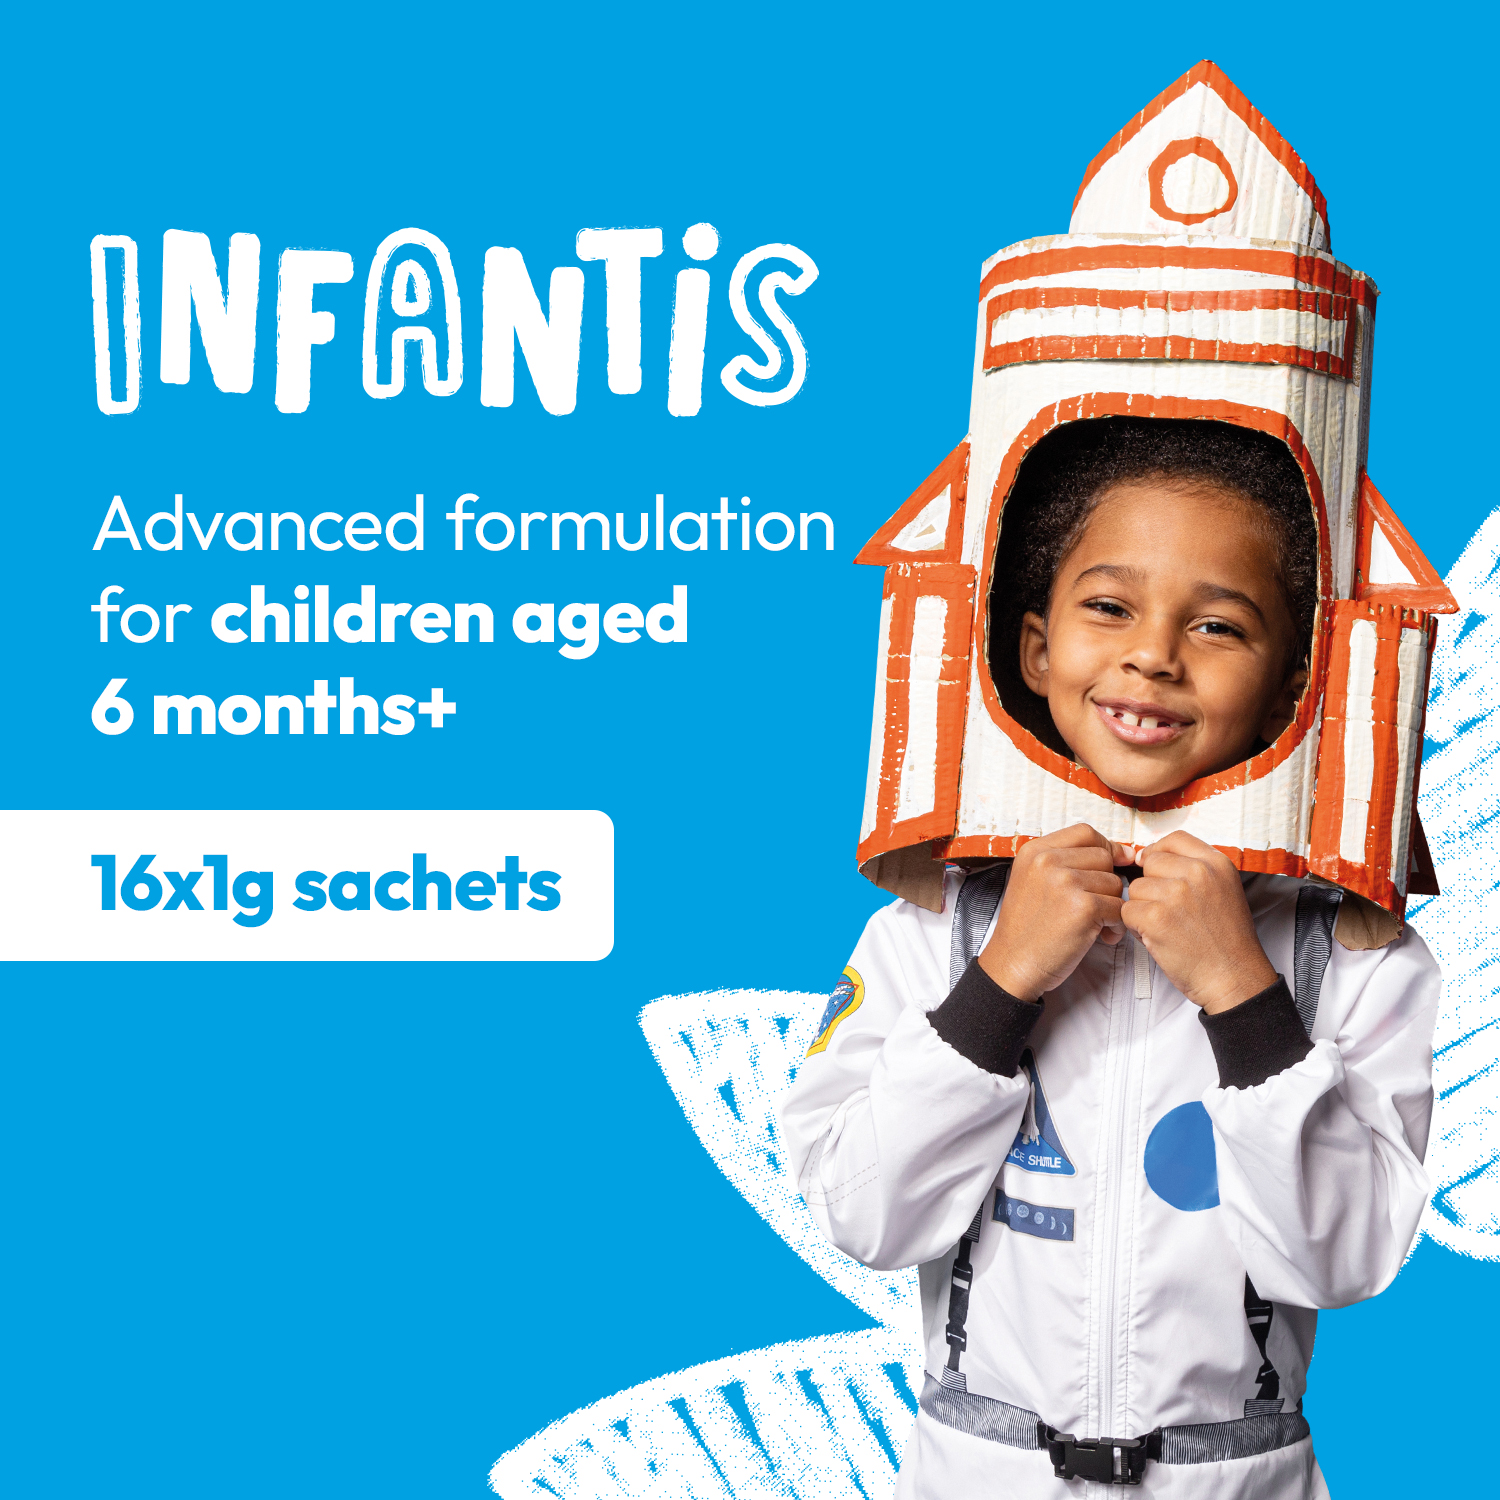 Infantis advanced formulation for children aged 6 months+/ 16x1g sachets.